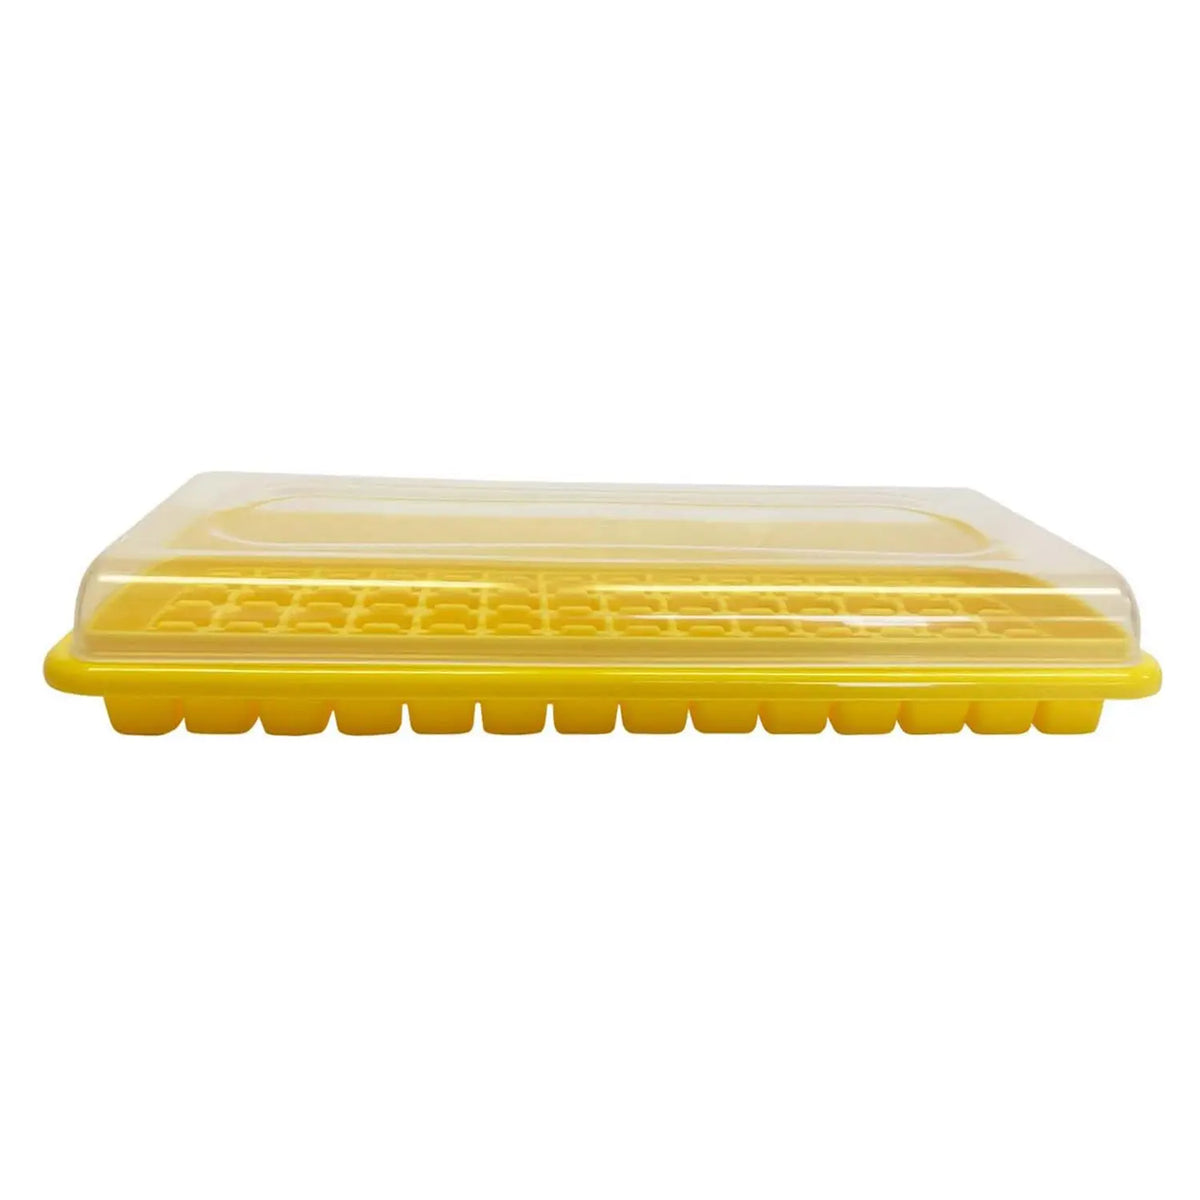 EBiSU Polypropylene Ice Tray Mini 84 pcs